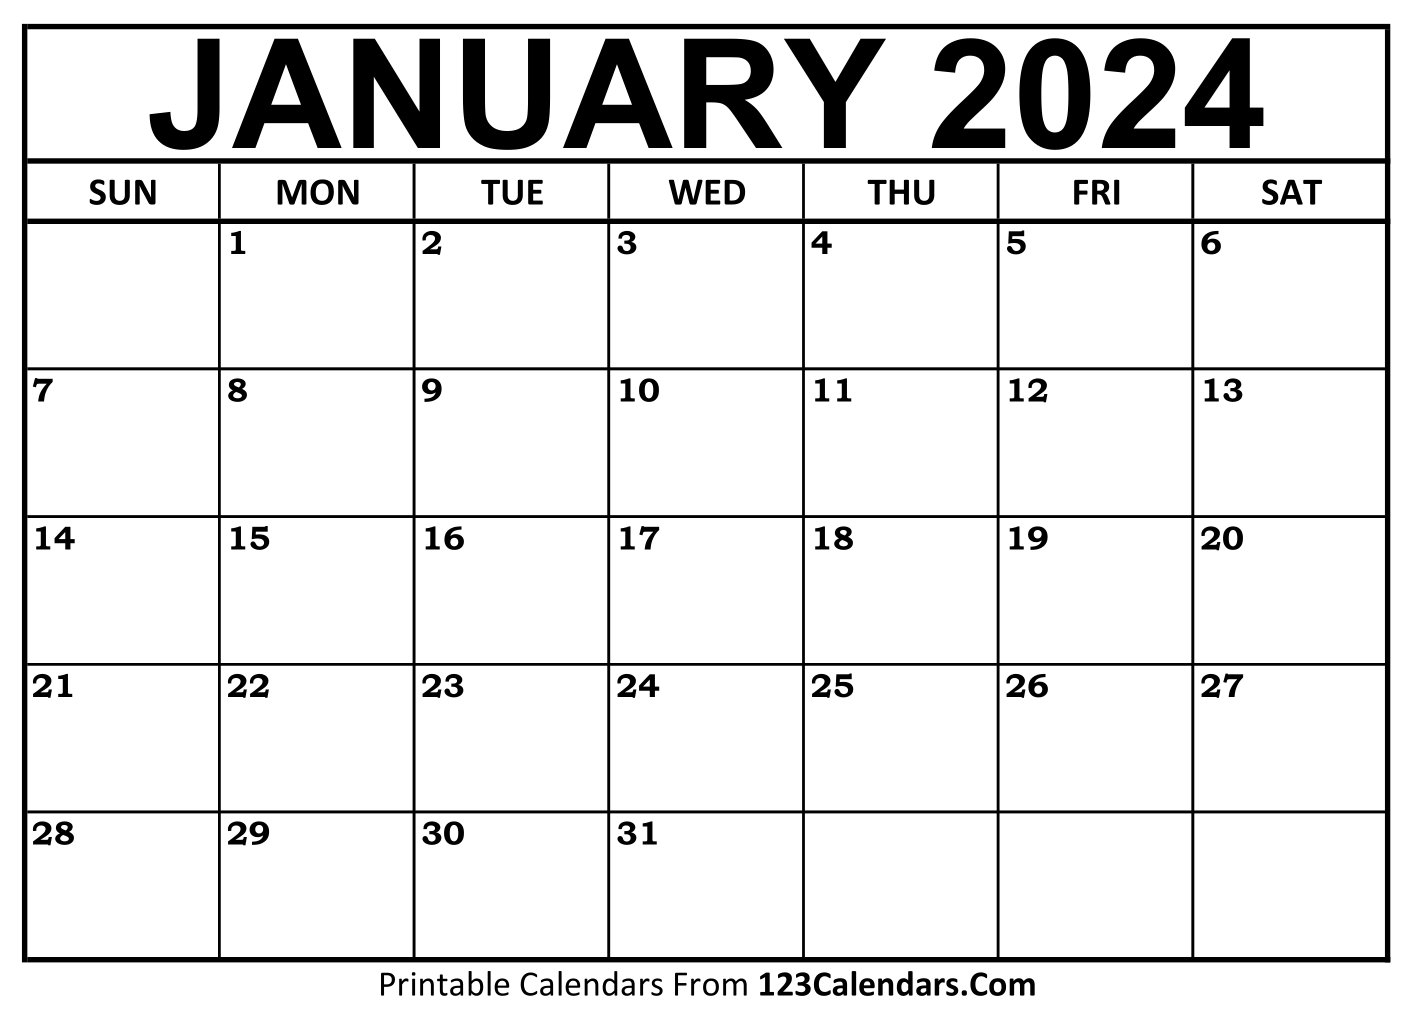 Printable January 2024 Calendar Templates - 123Calendars for Free-Printable-Calendar January 2024